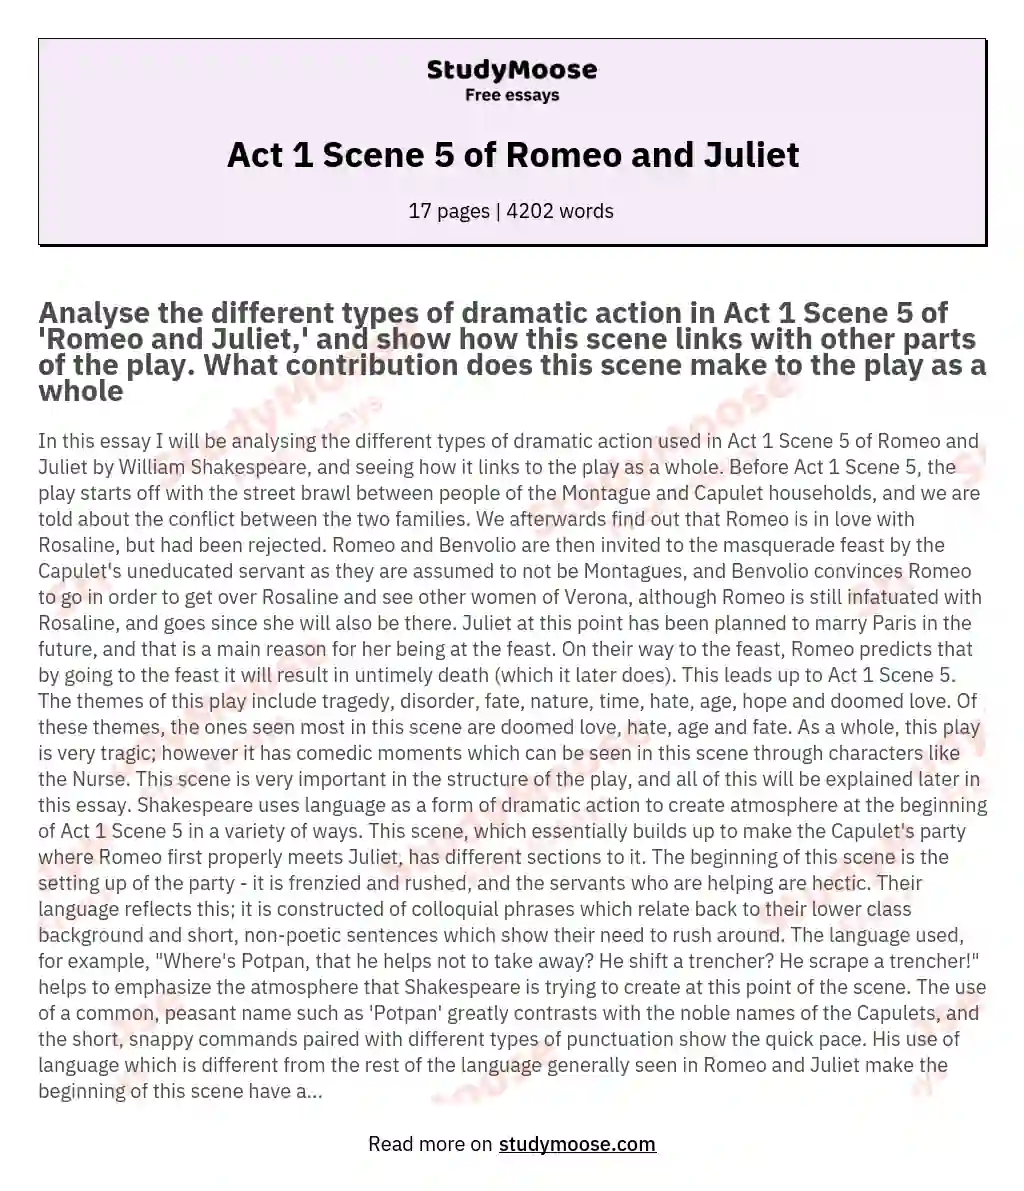 Act 1 Scene 5 of Romeo and Juliet essay